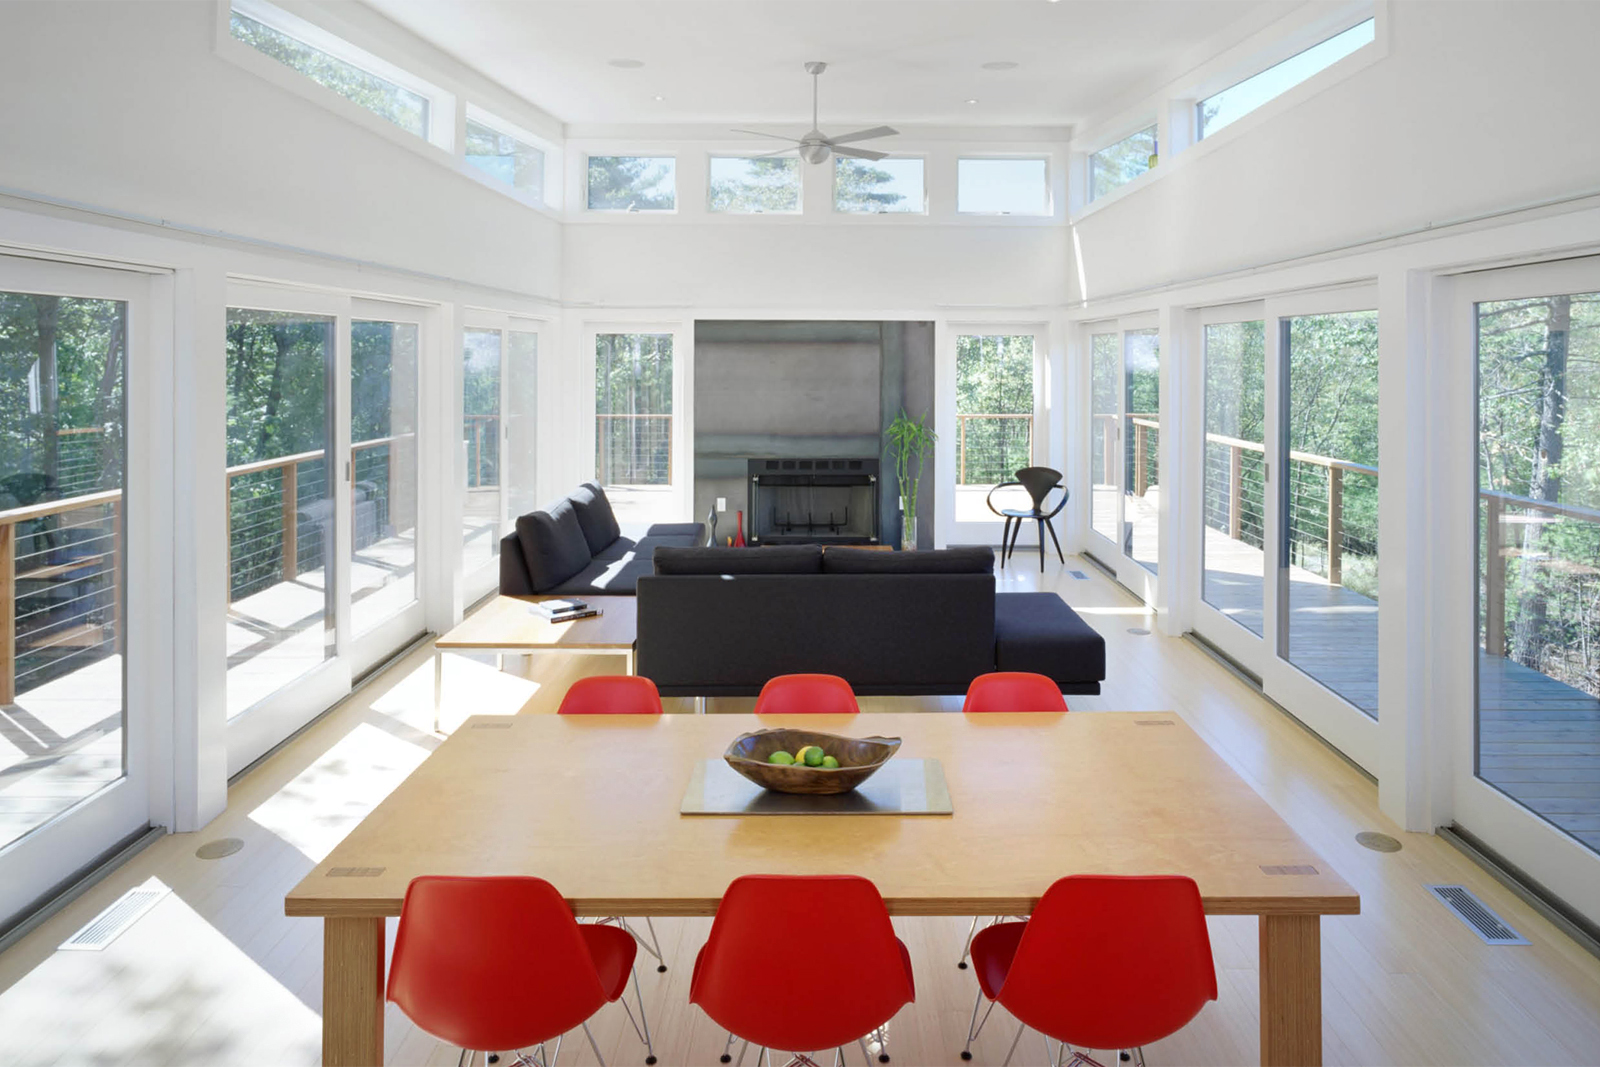 05-res4-resolution-4-architecture-modern-modular-home-prefab-house-mountain-retreat-interior-dining-living-room.jpg